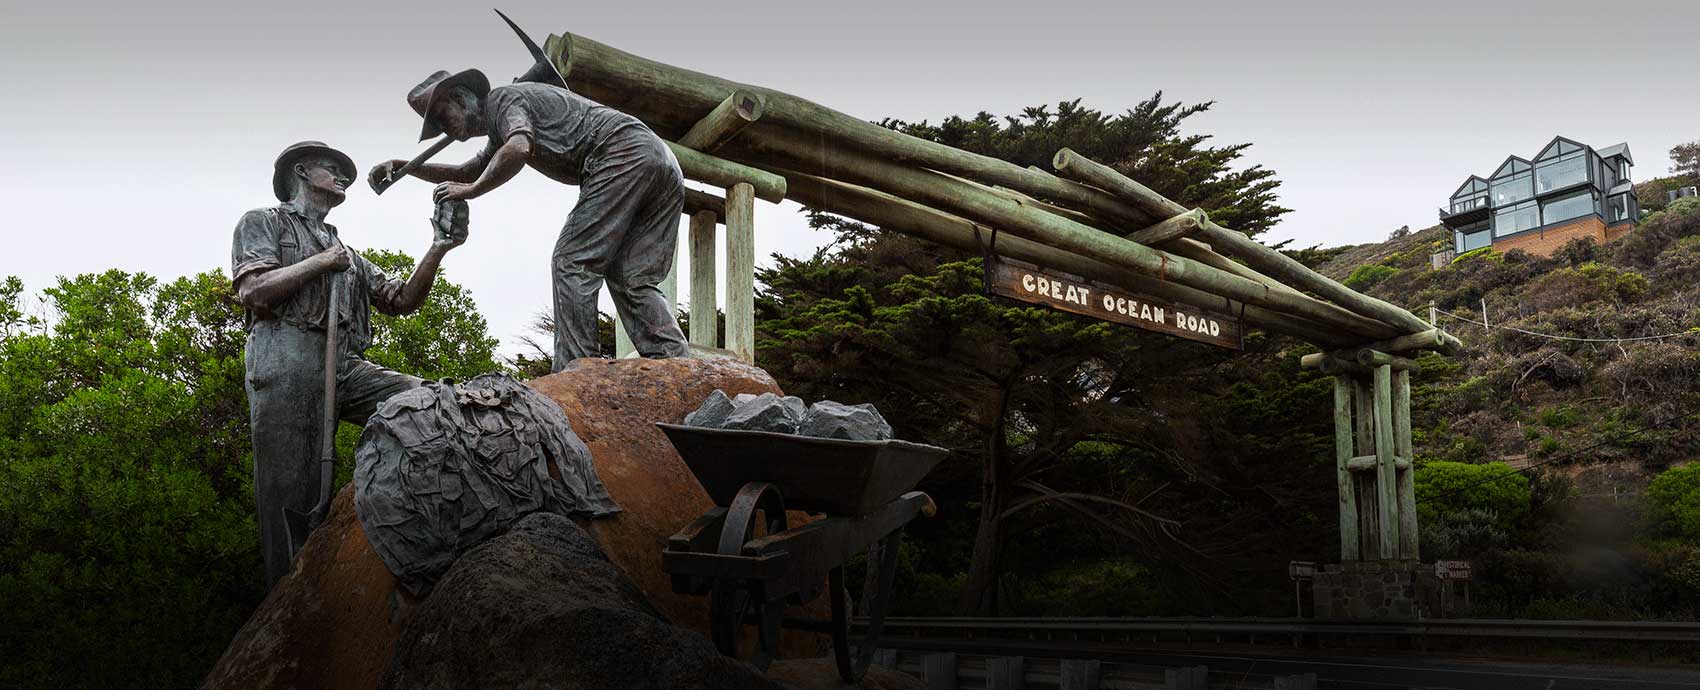 Great Ocean Road memorial sculpture, Surf Coast